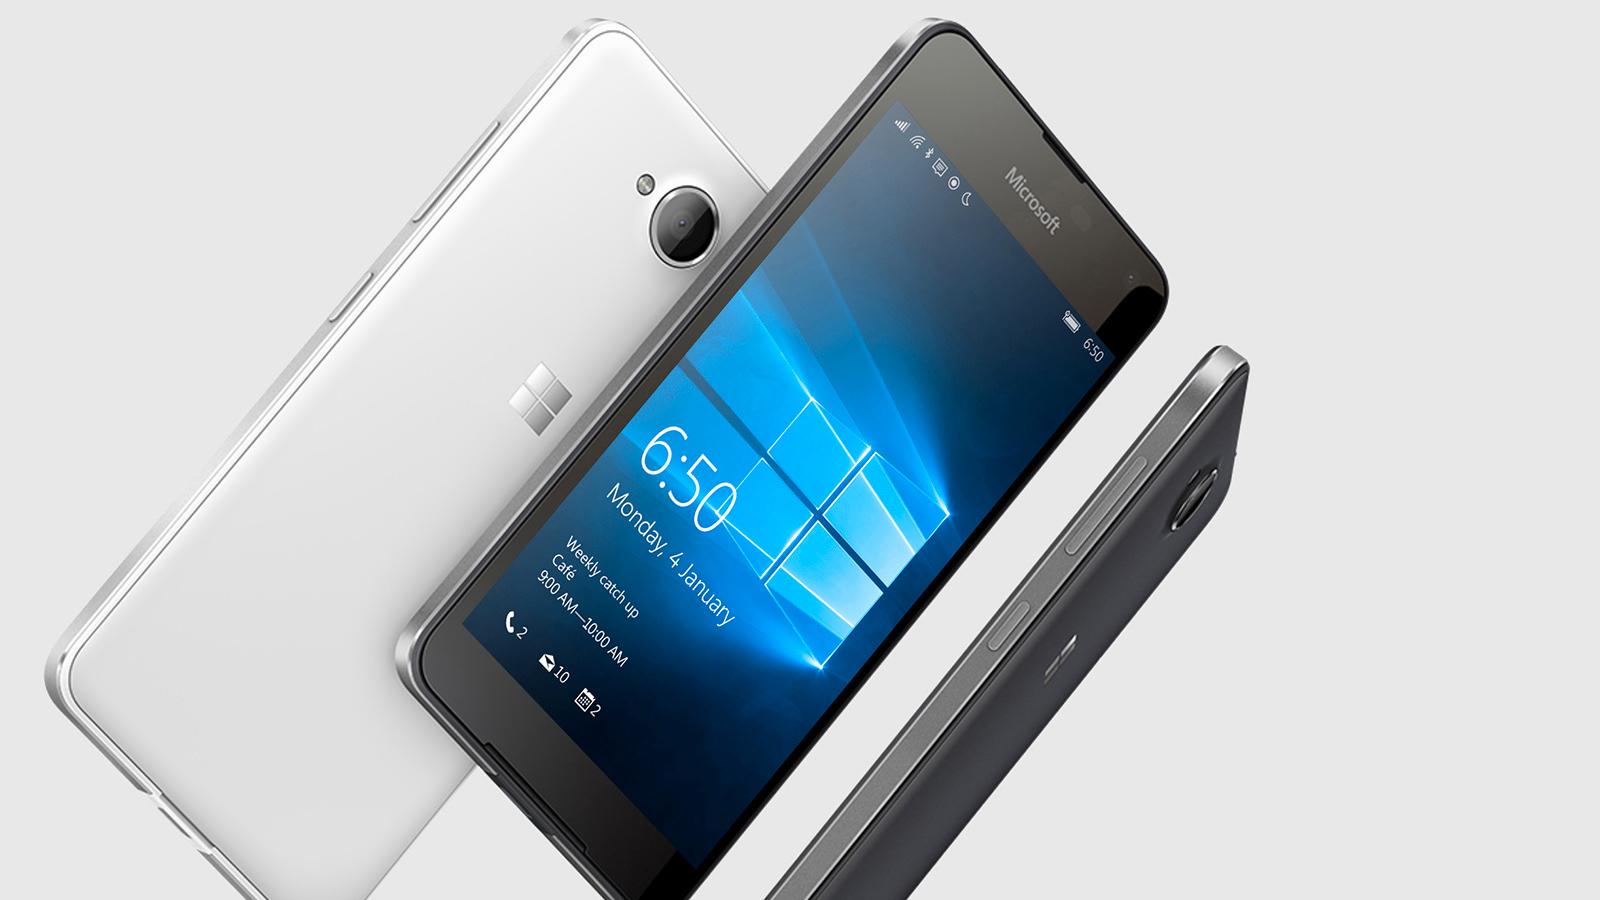 Dette er Microsofts nye billig-mobil i metall